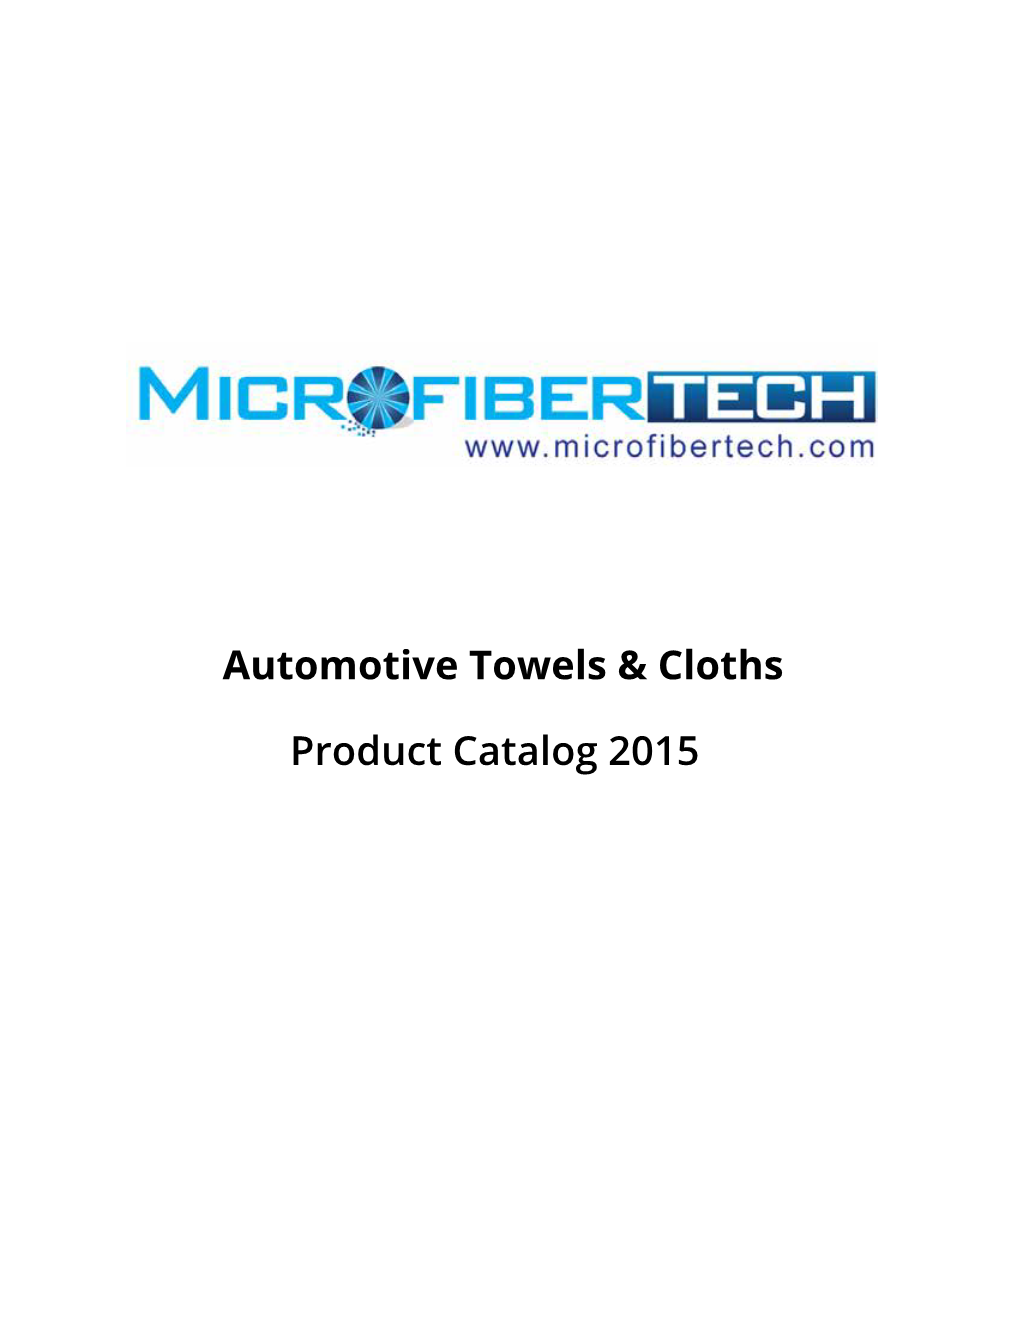 Automotive Towels & Cloths Product Catalog 2015